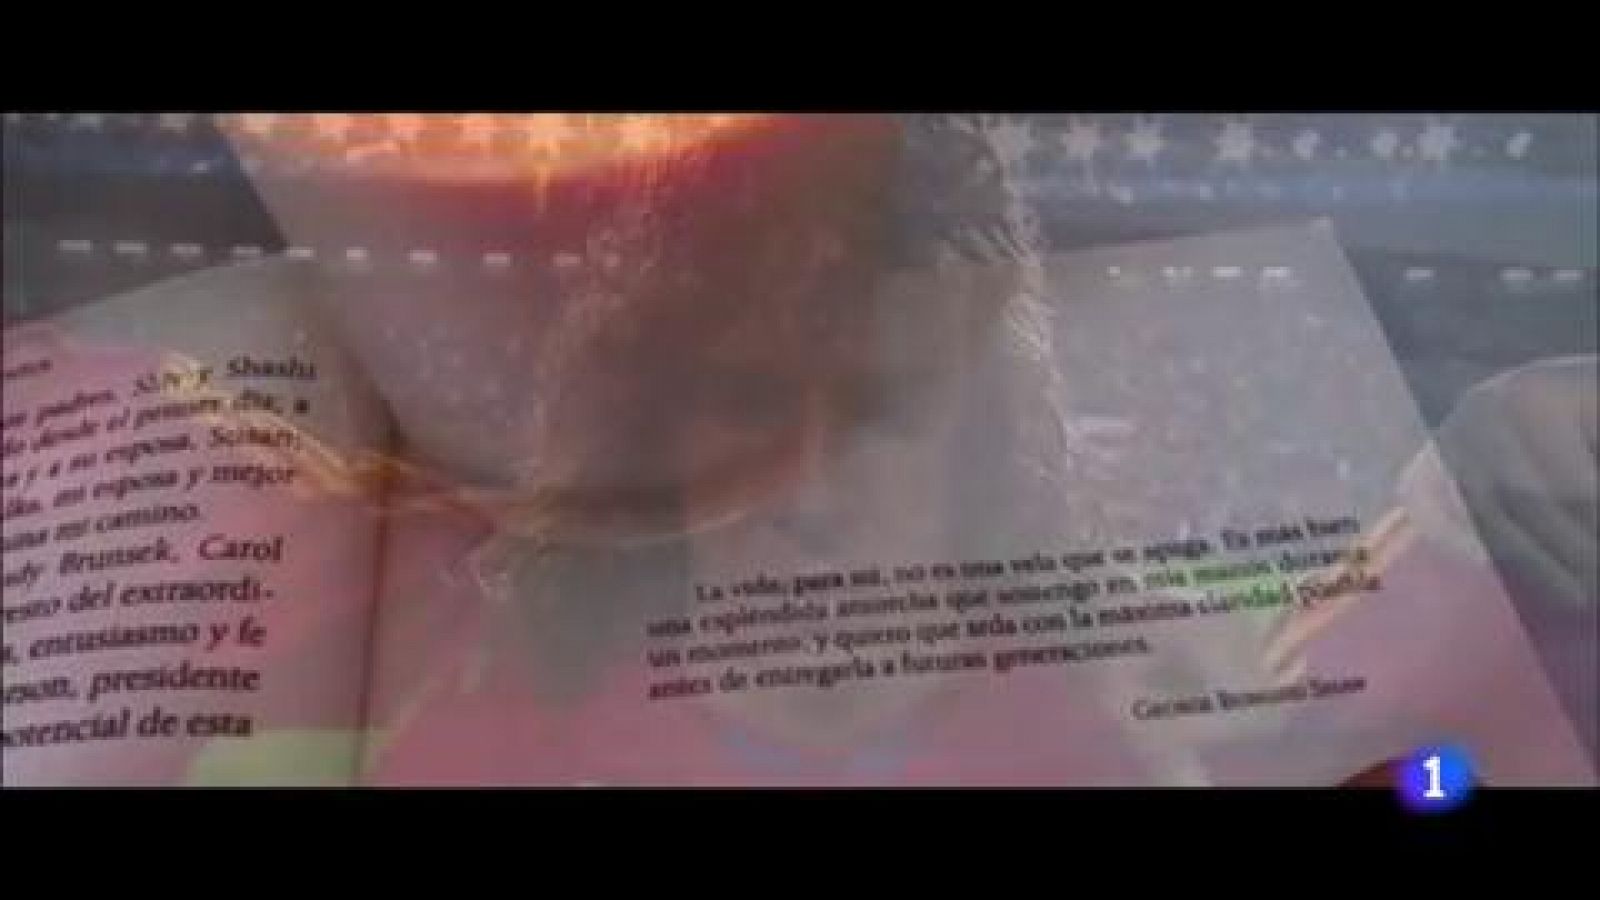 Mundial 2010 | Entrevista a Puyol: "Íbamos todos a una"